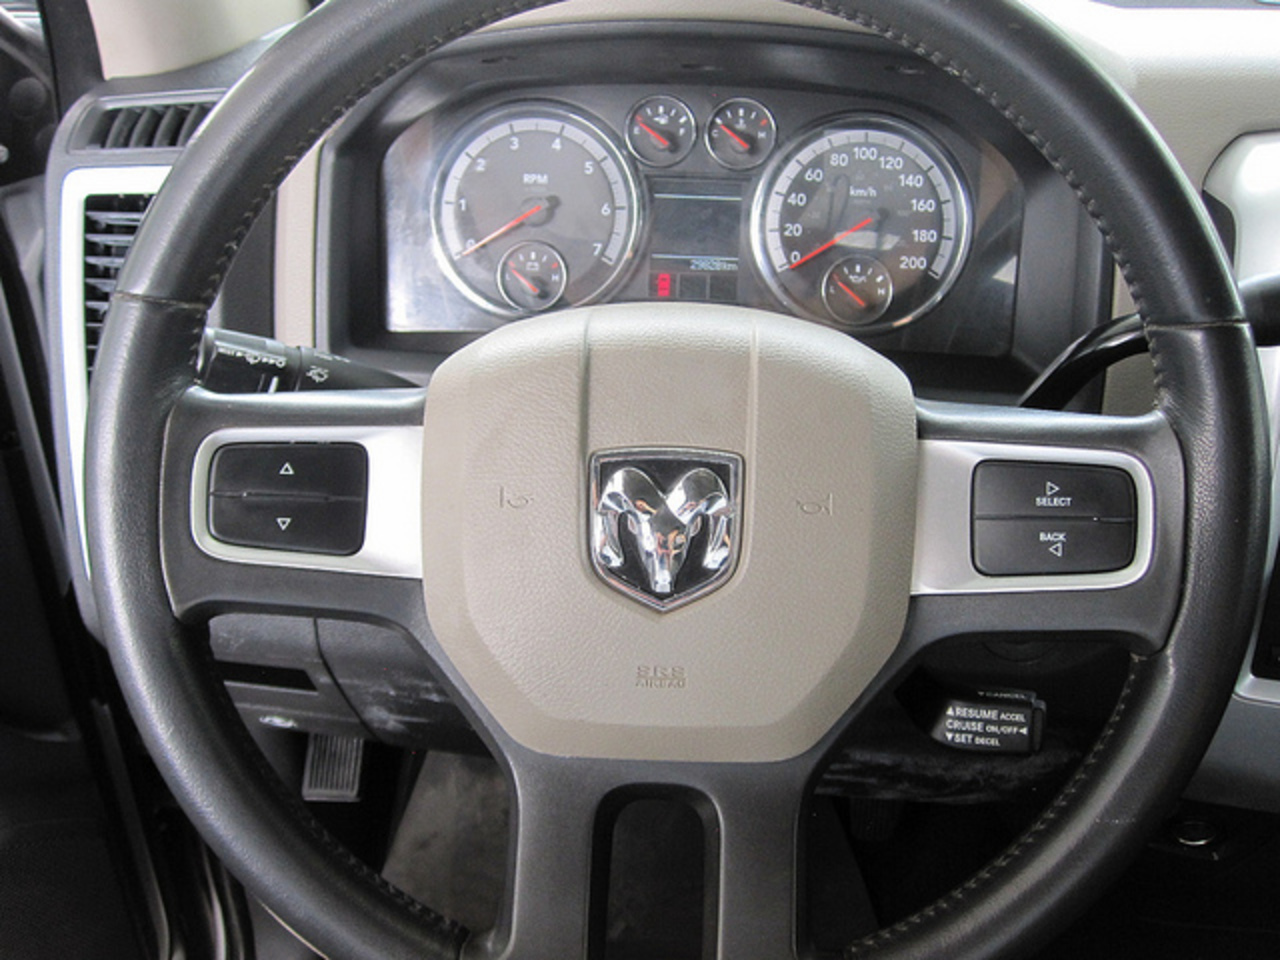 2010 Dodge Ram 2500, Crew Cab SLT | Flickr - Photo Sharing!